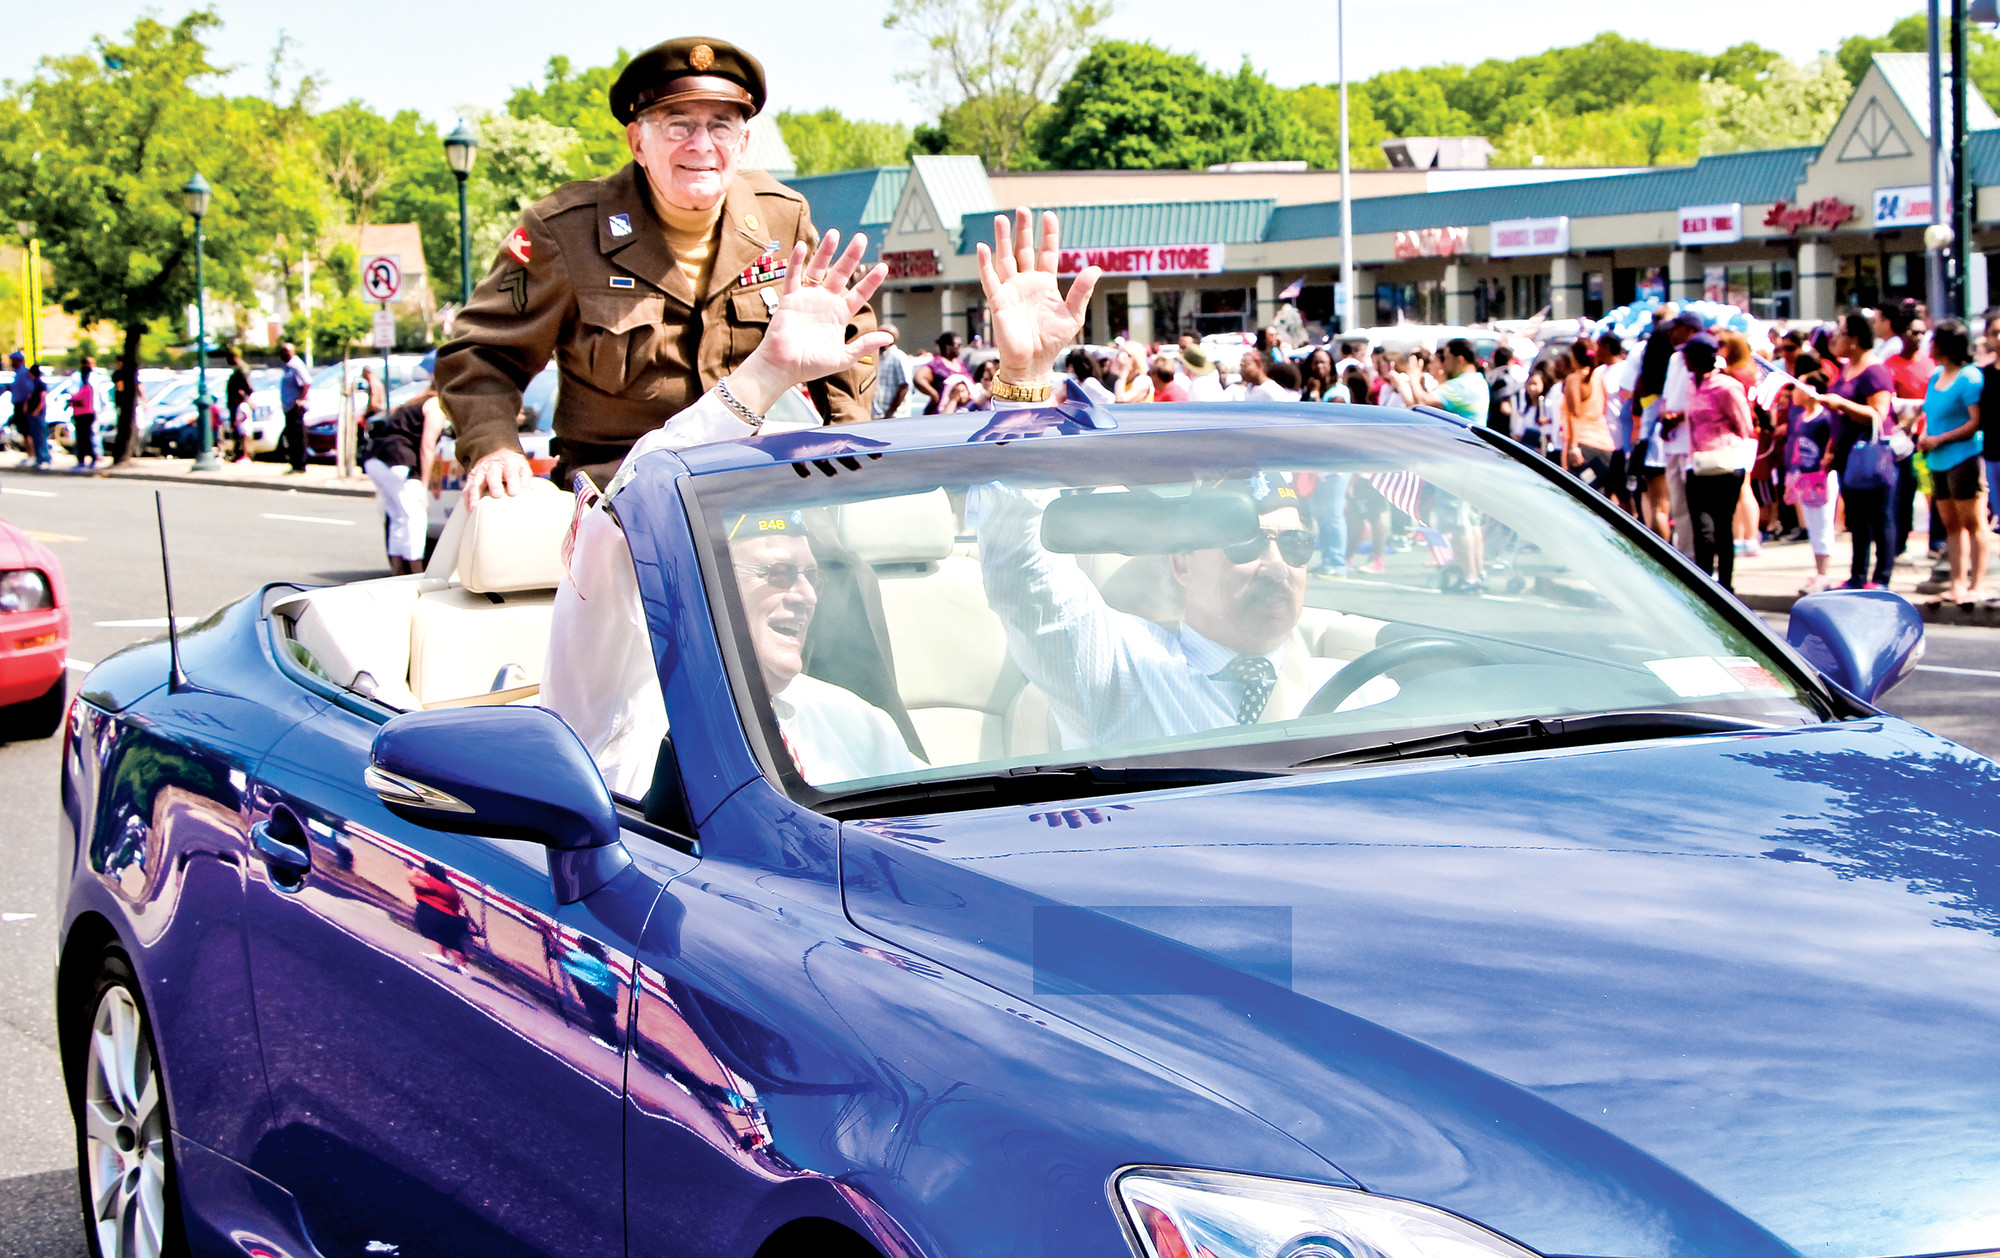 World War II veteran was the parade's grand marshal.